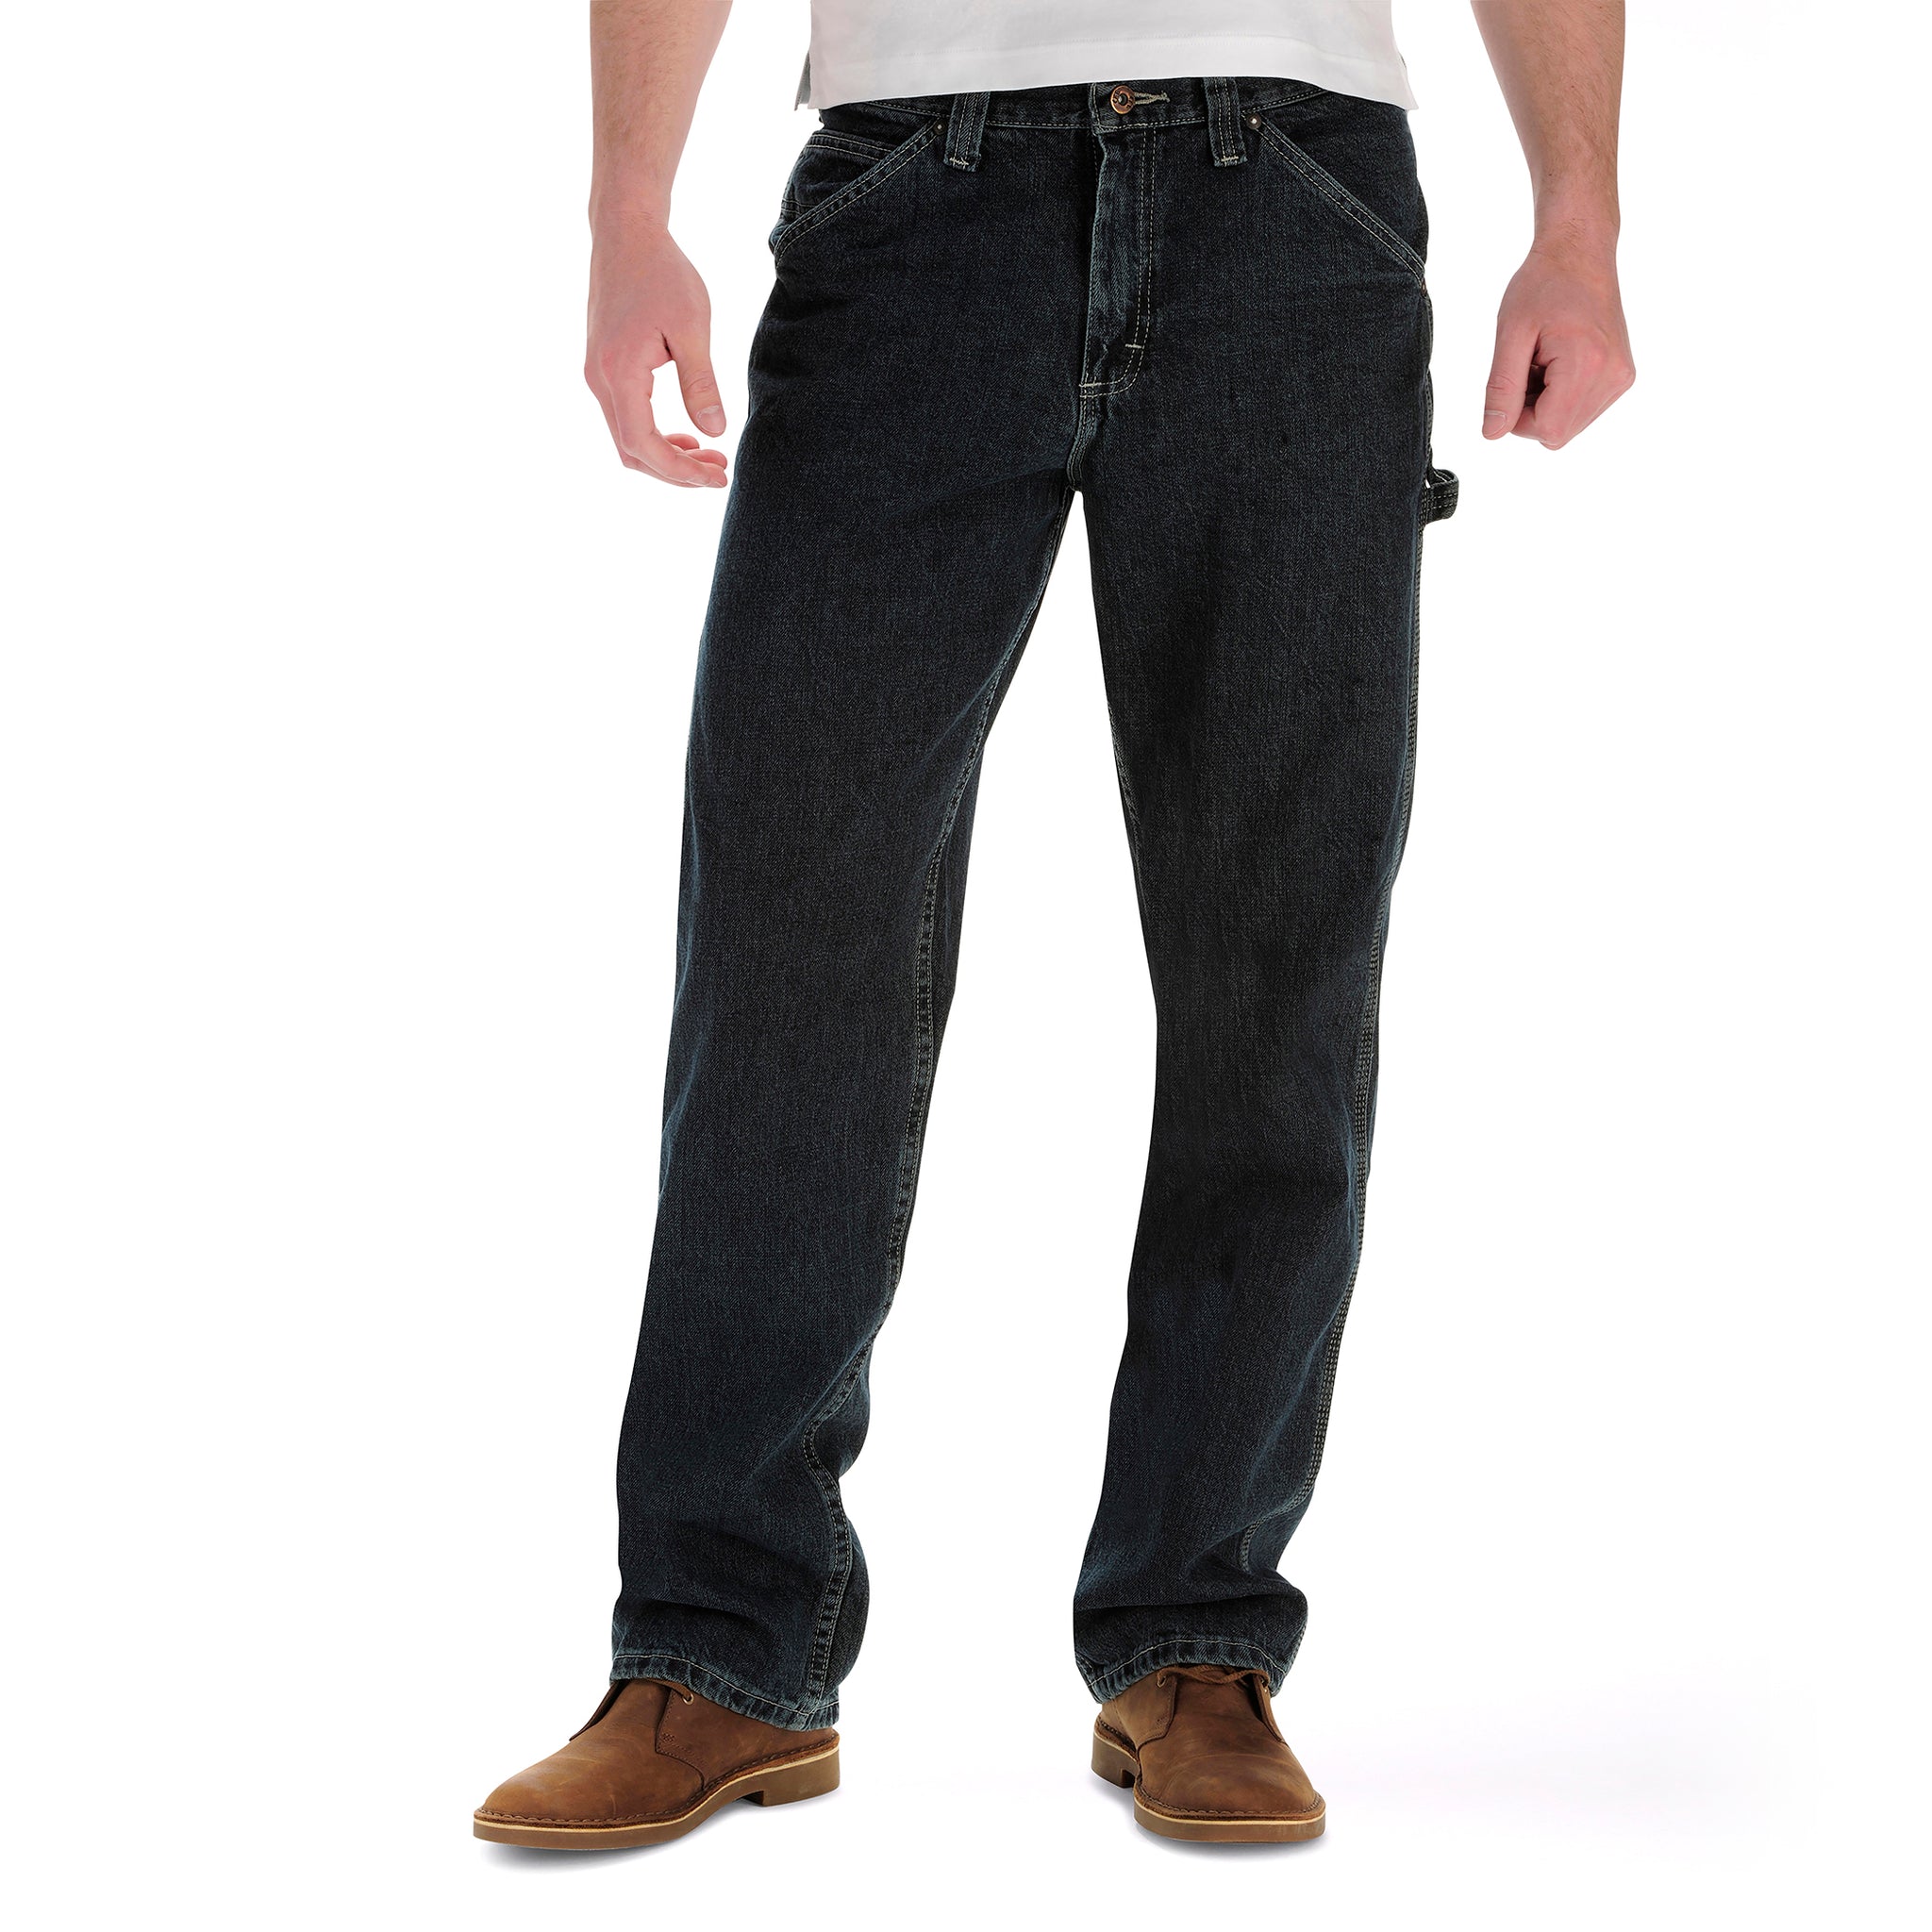 RL Polo Jeans Co Mens 36x30 Stone Wash C-5 Carpenter Straight Leg Denim  Jeans